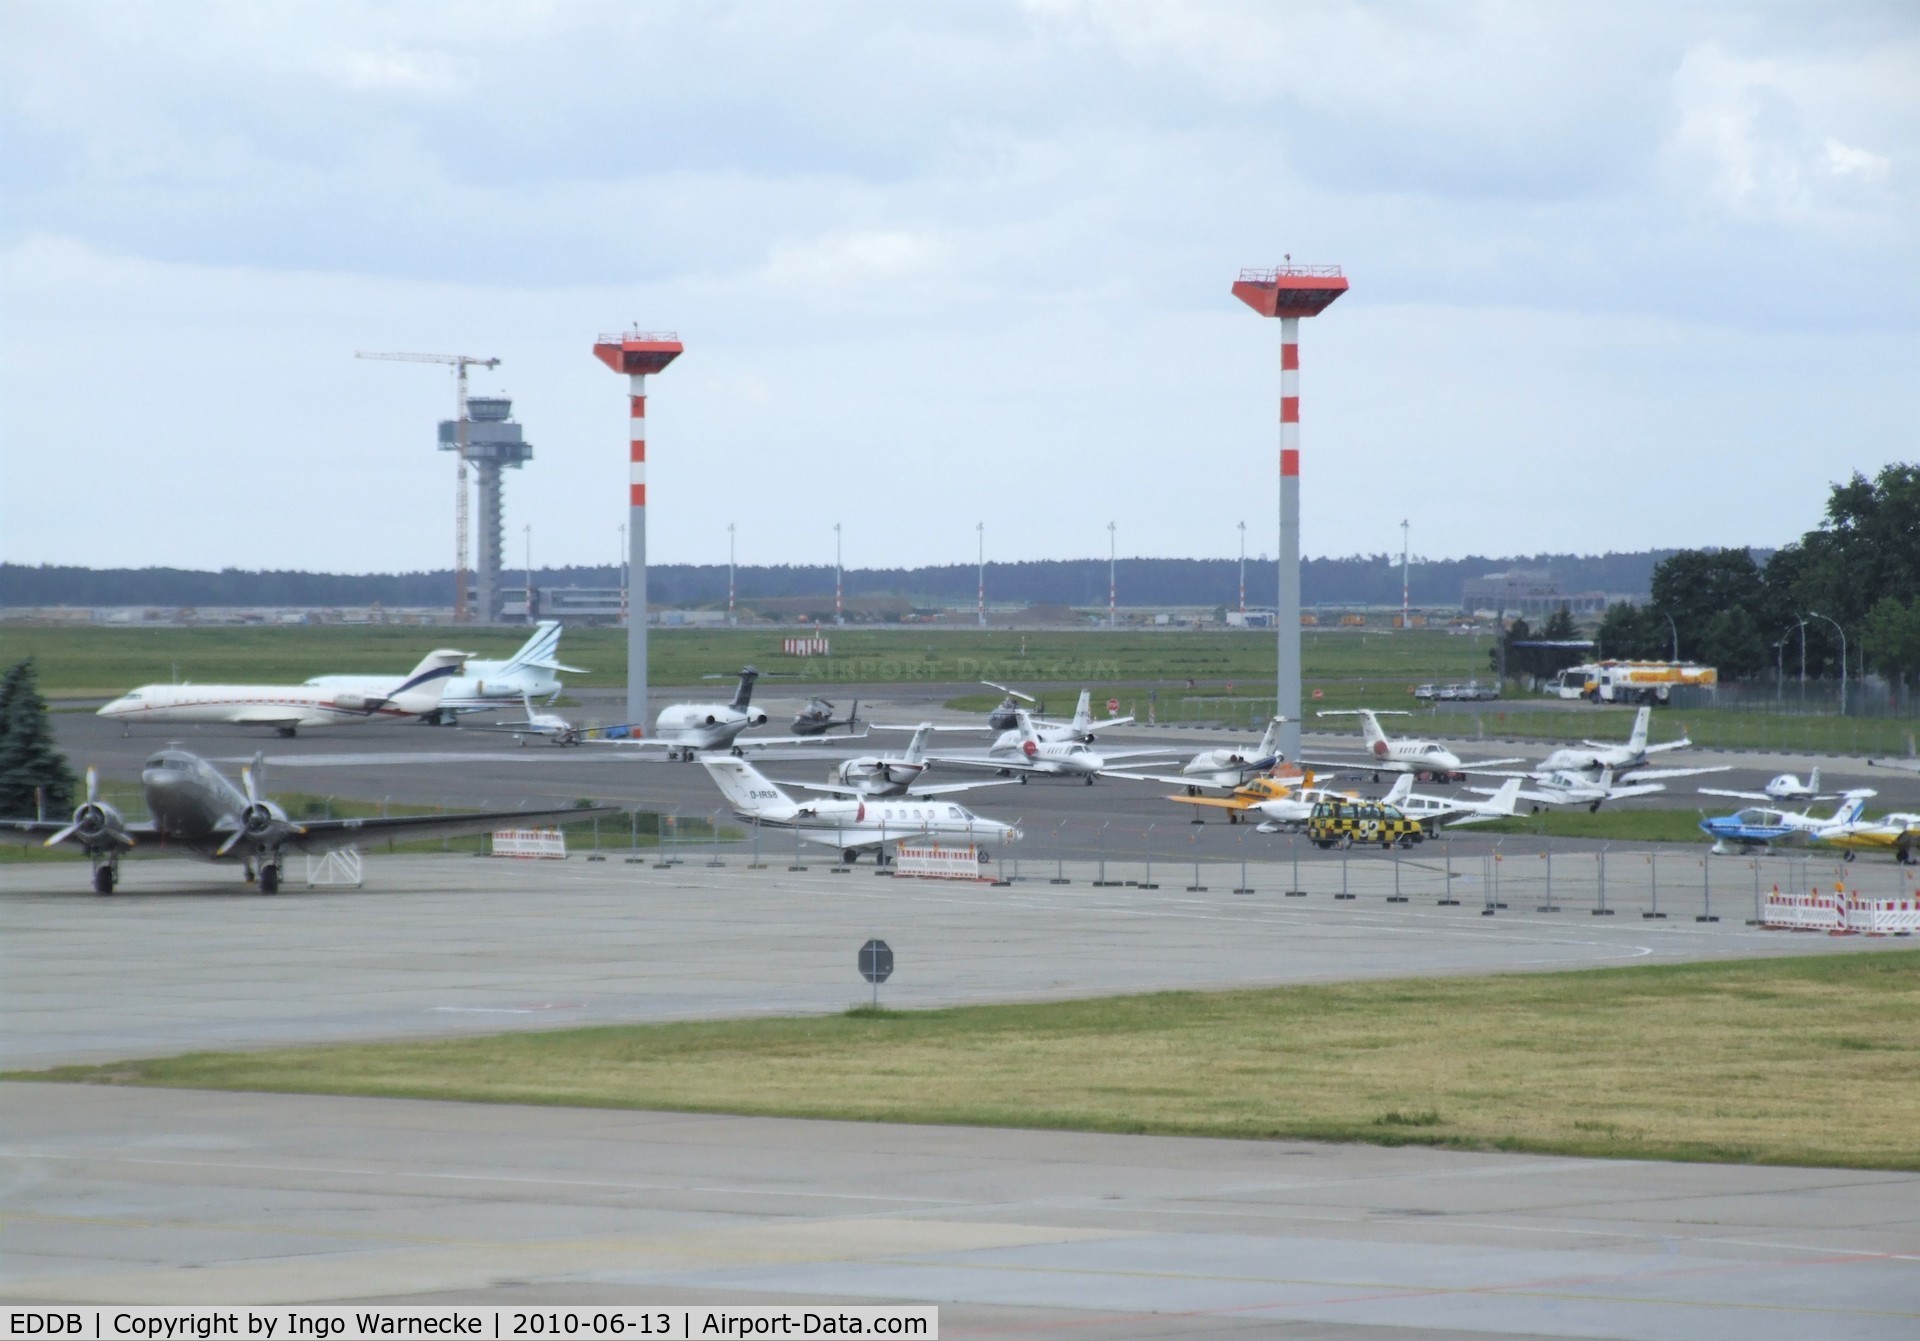 Berlin Brandenburg International Airport, Berlin Germany (EDDB) - looking at the apron and the GA area at Schönefeld airport